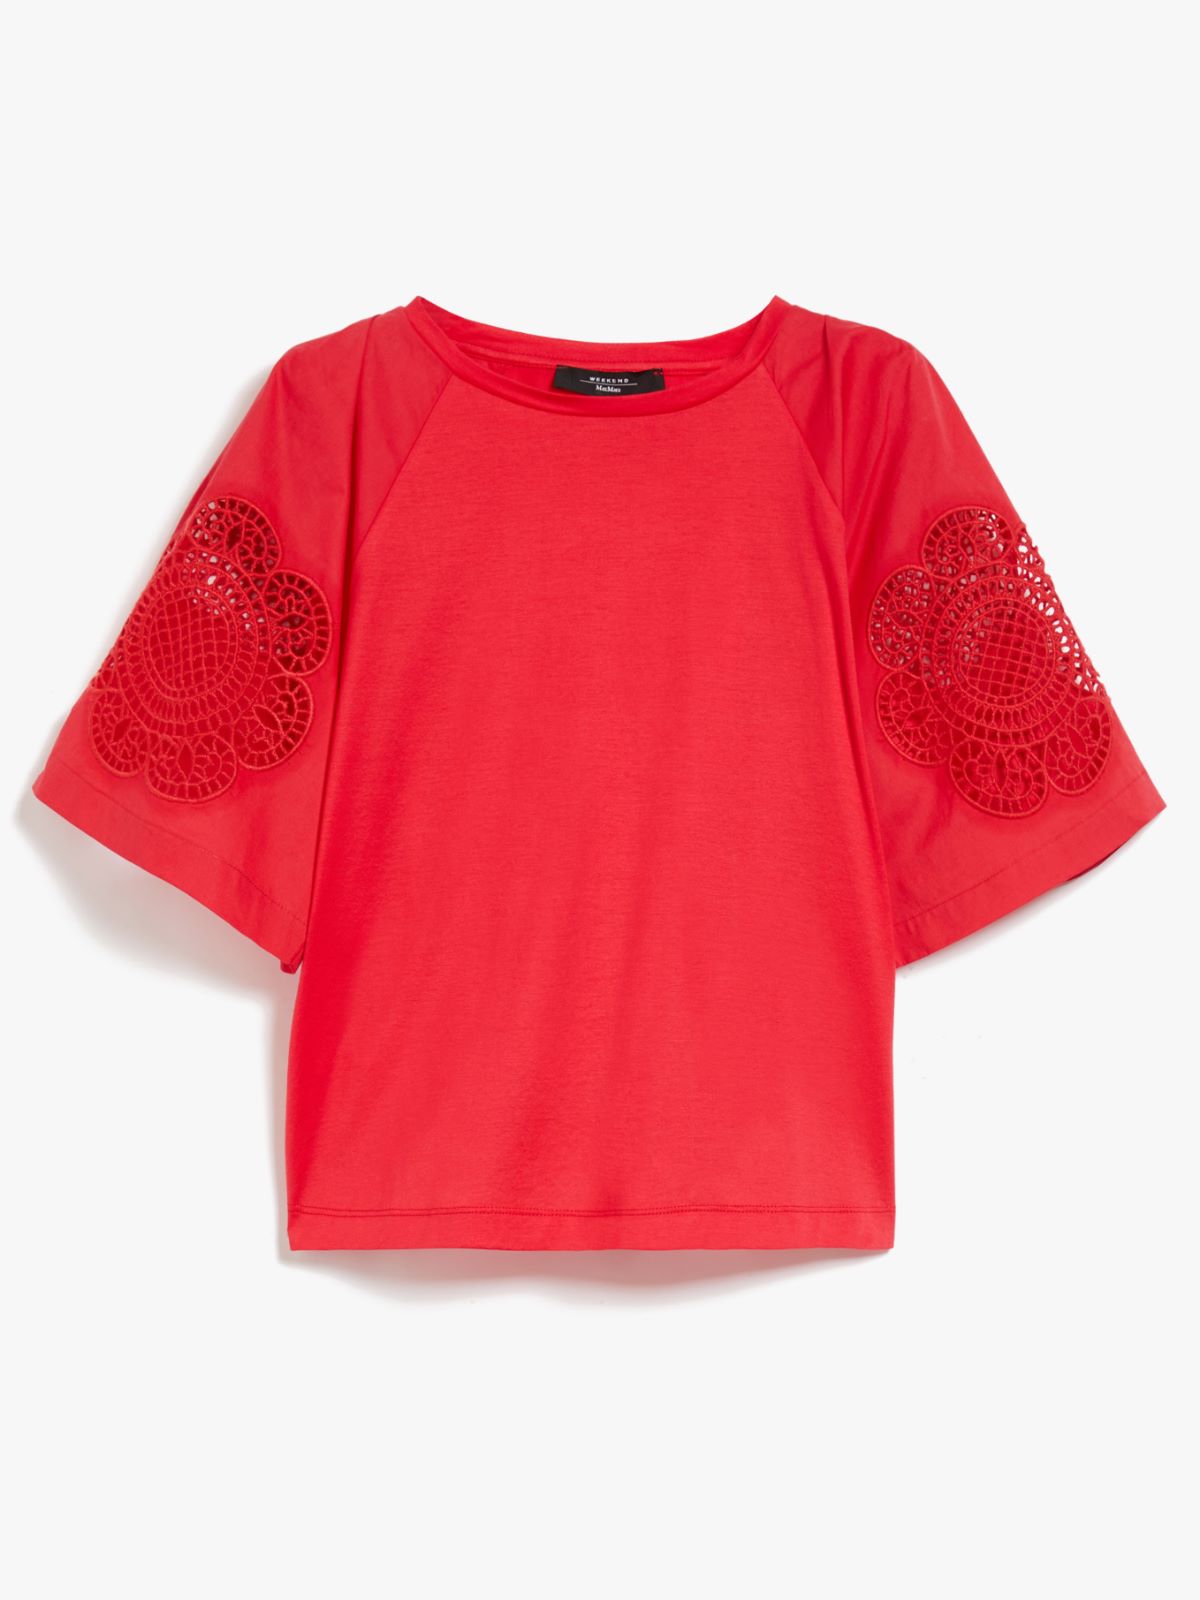 Cotton jersey T-shirt - RED - Weekend Max Mara - 6